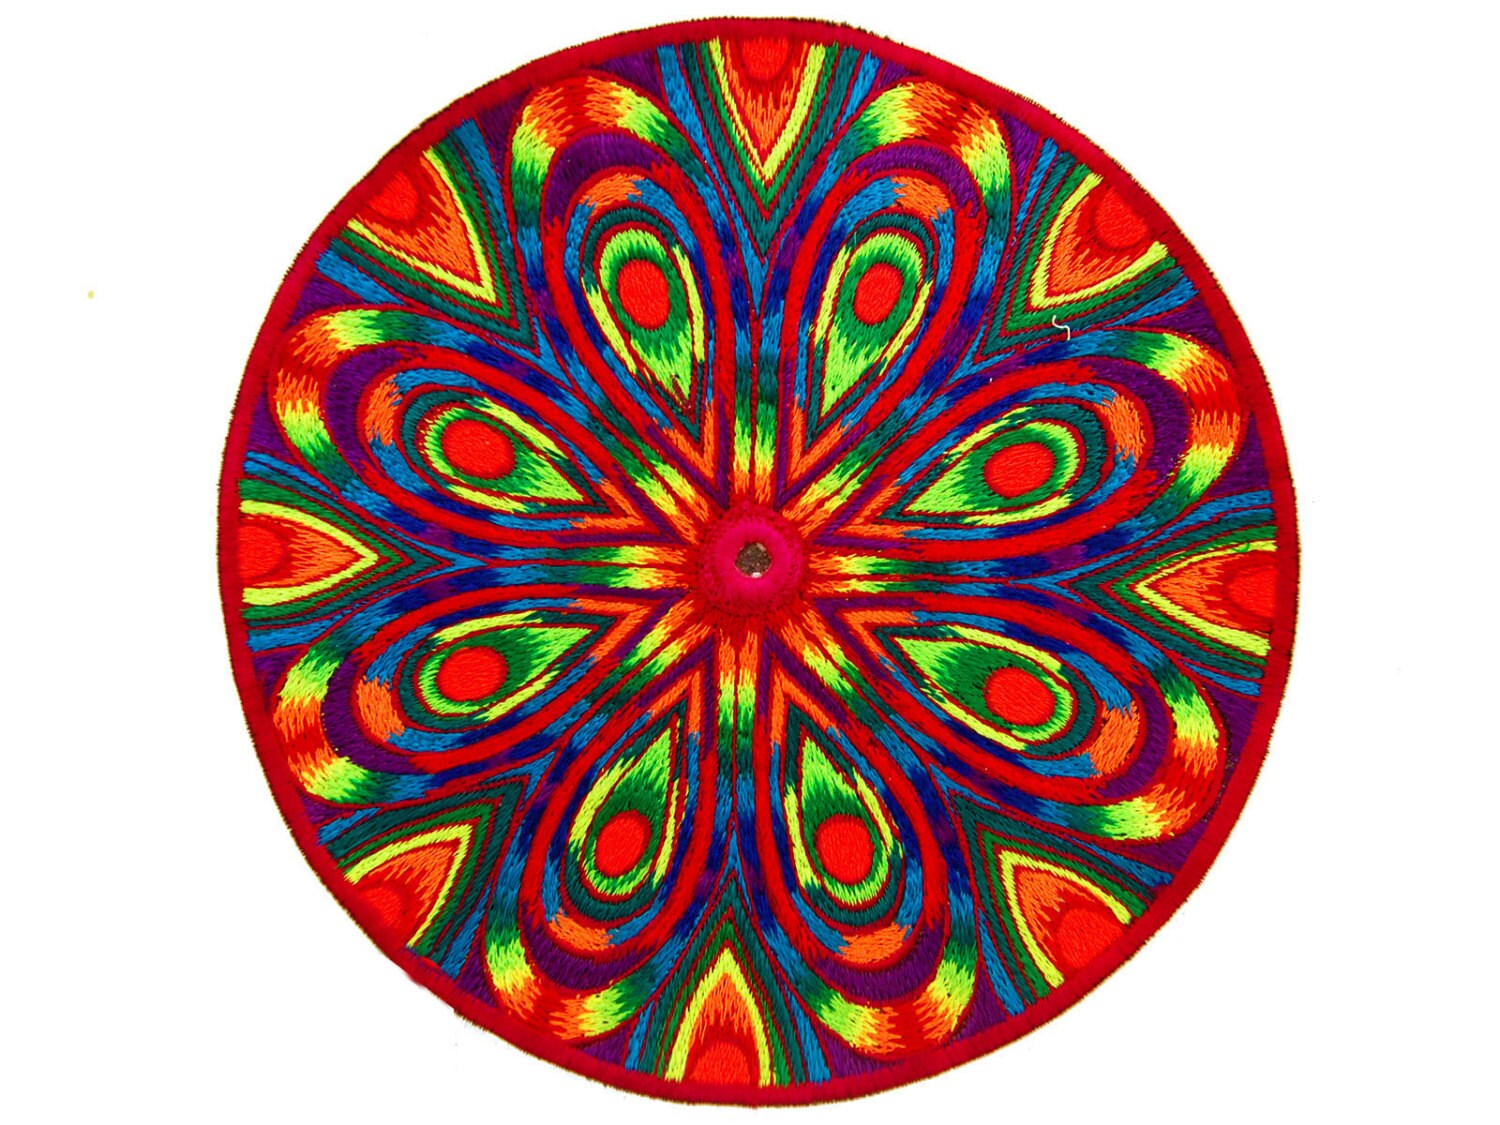 Beltbag rainbow LSD mandala - 7 pockets, strong ziplocks, size adjustable with hook & loop and clip - blacklight active lines flower of life